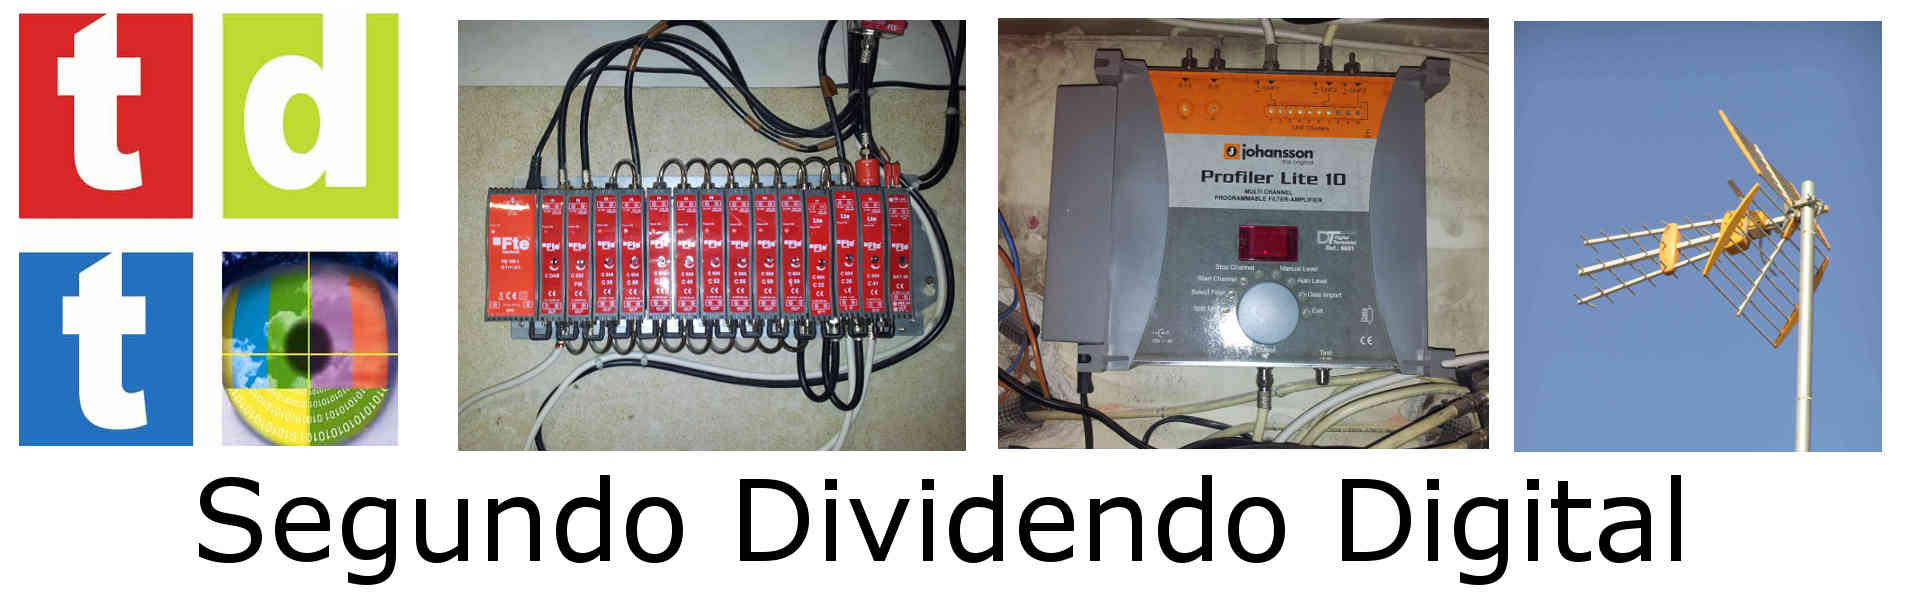 Segundo_dividendo_digital